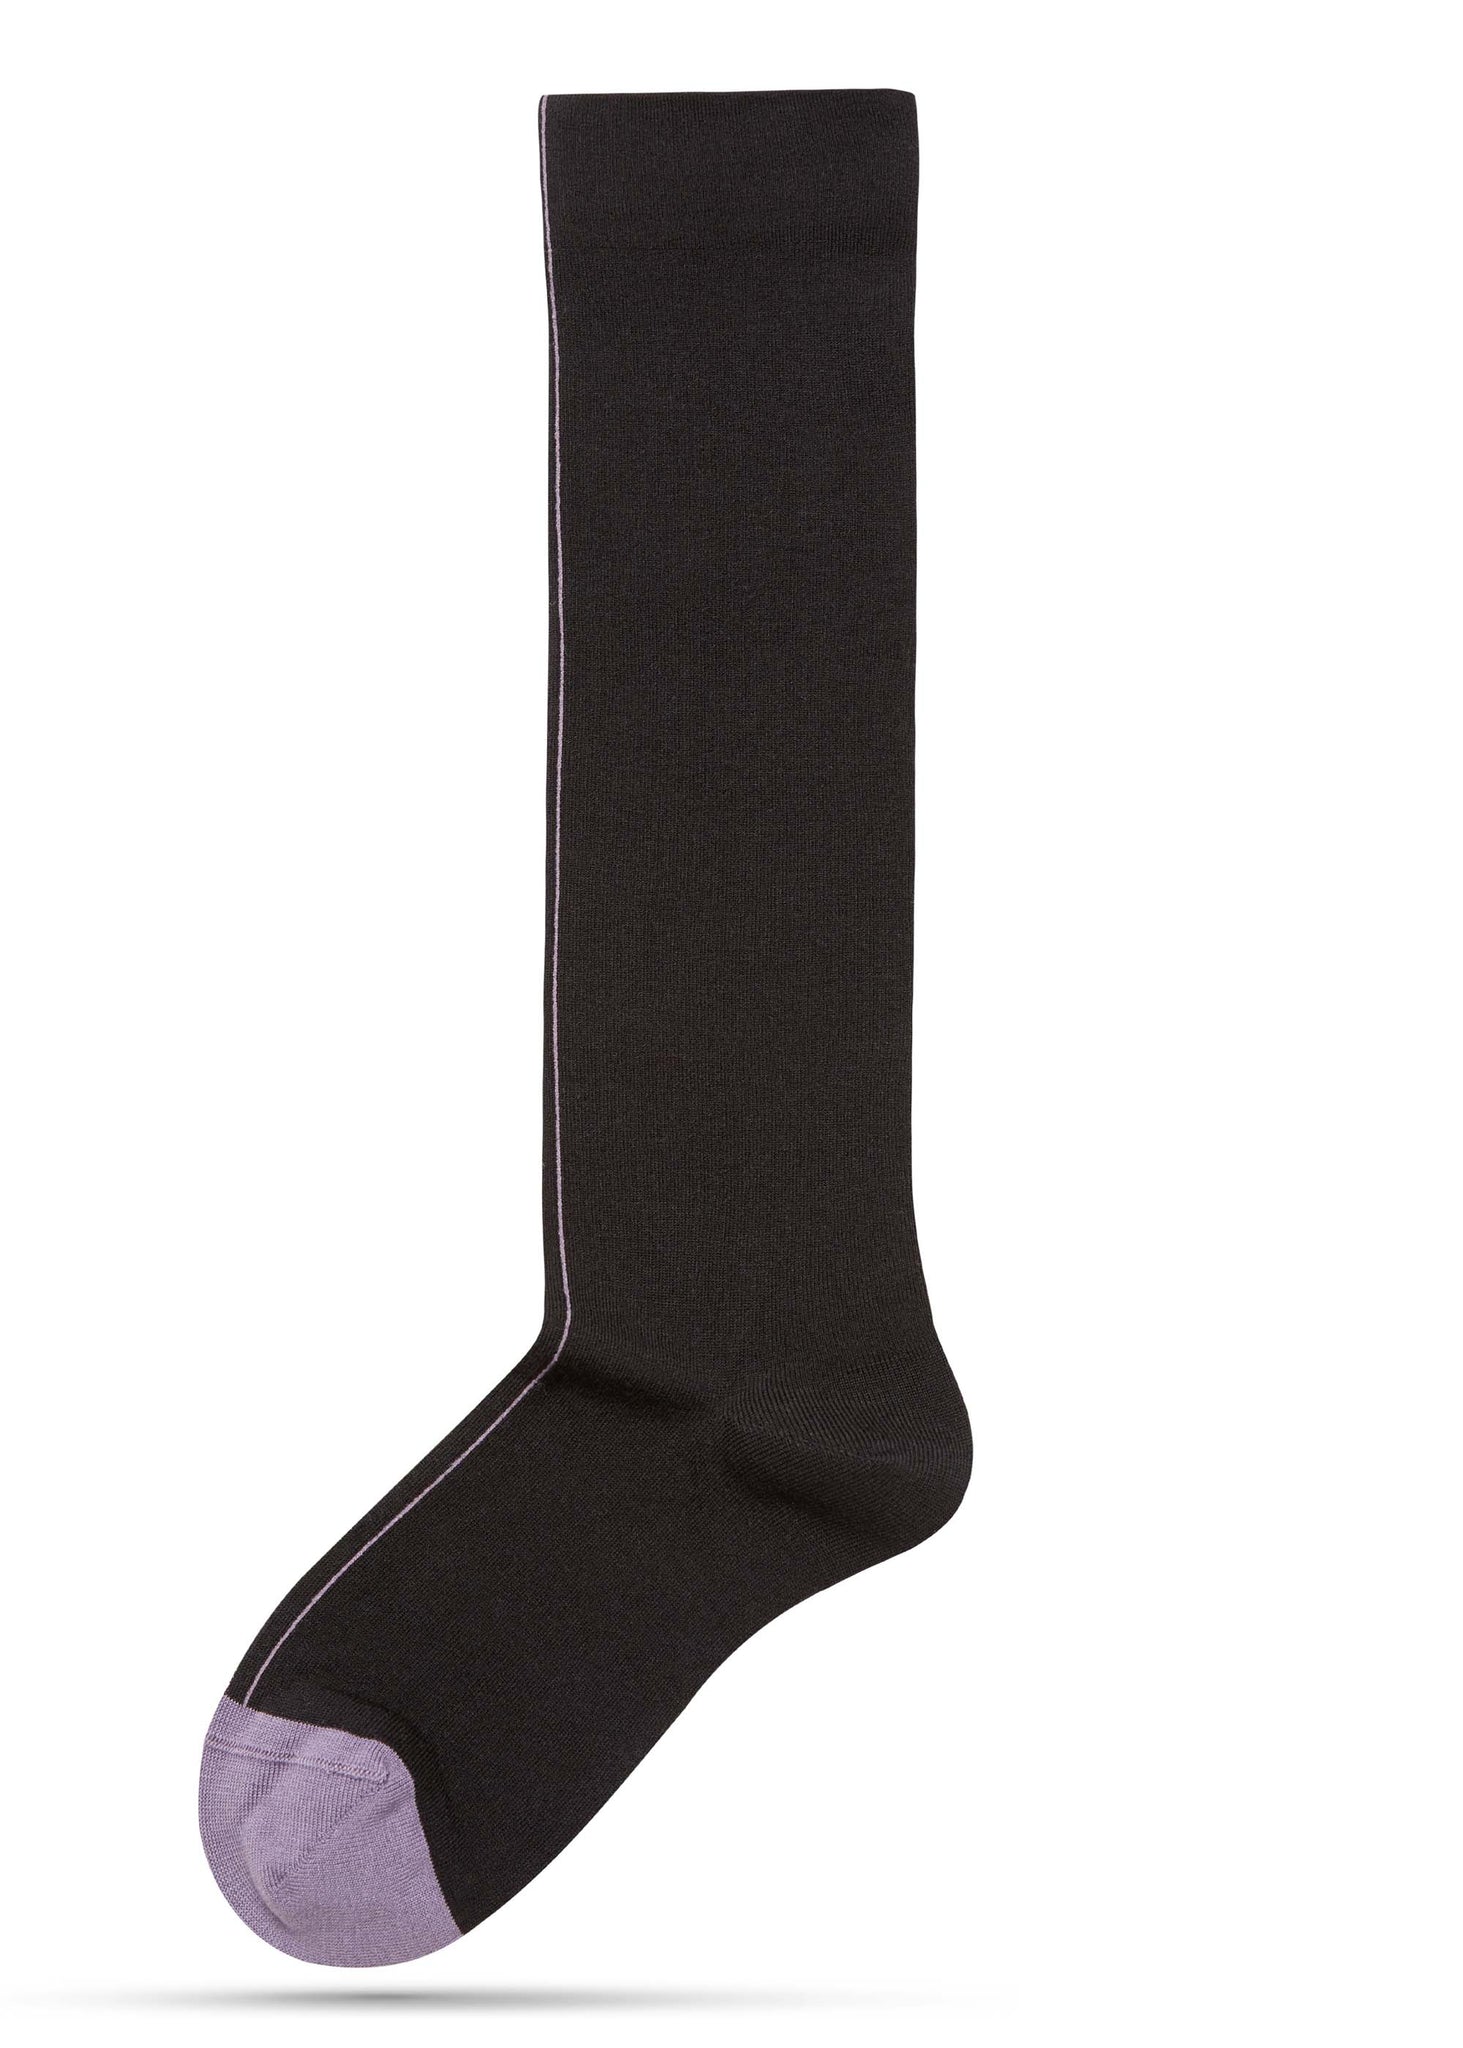 Black & Violet Calf-High Socks - 157Moments